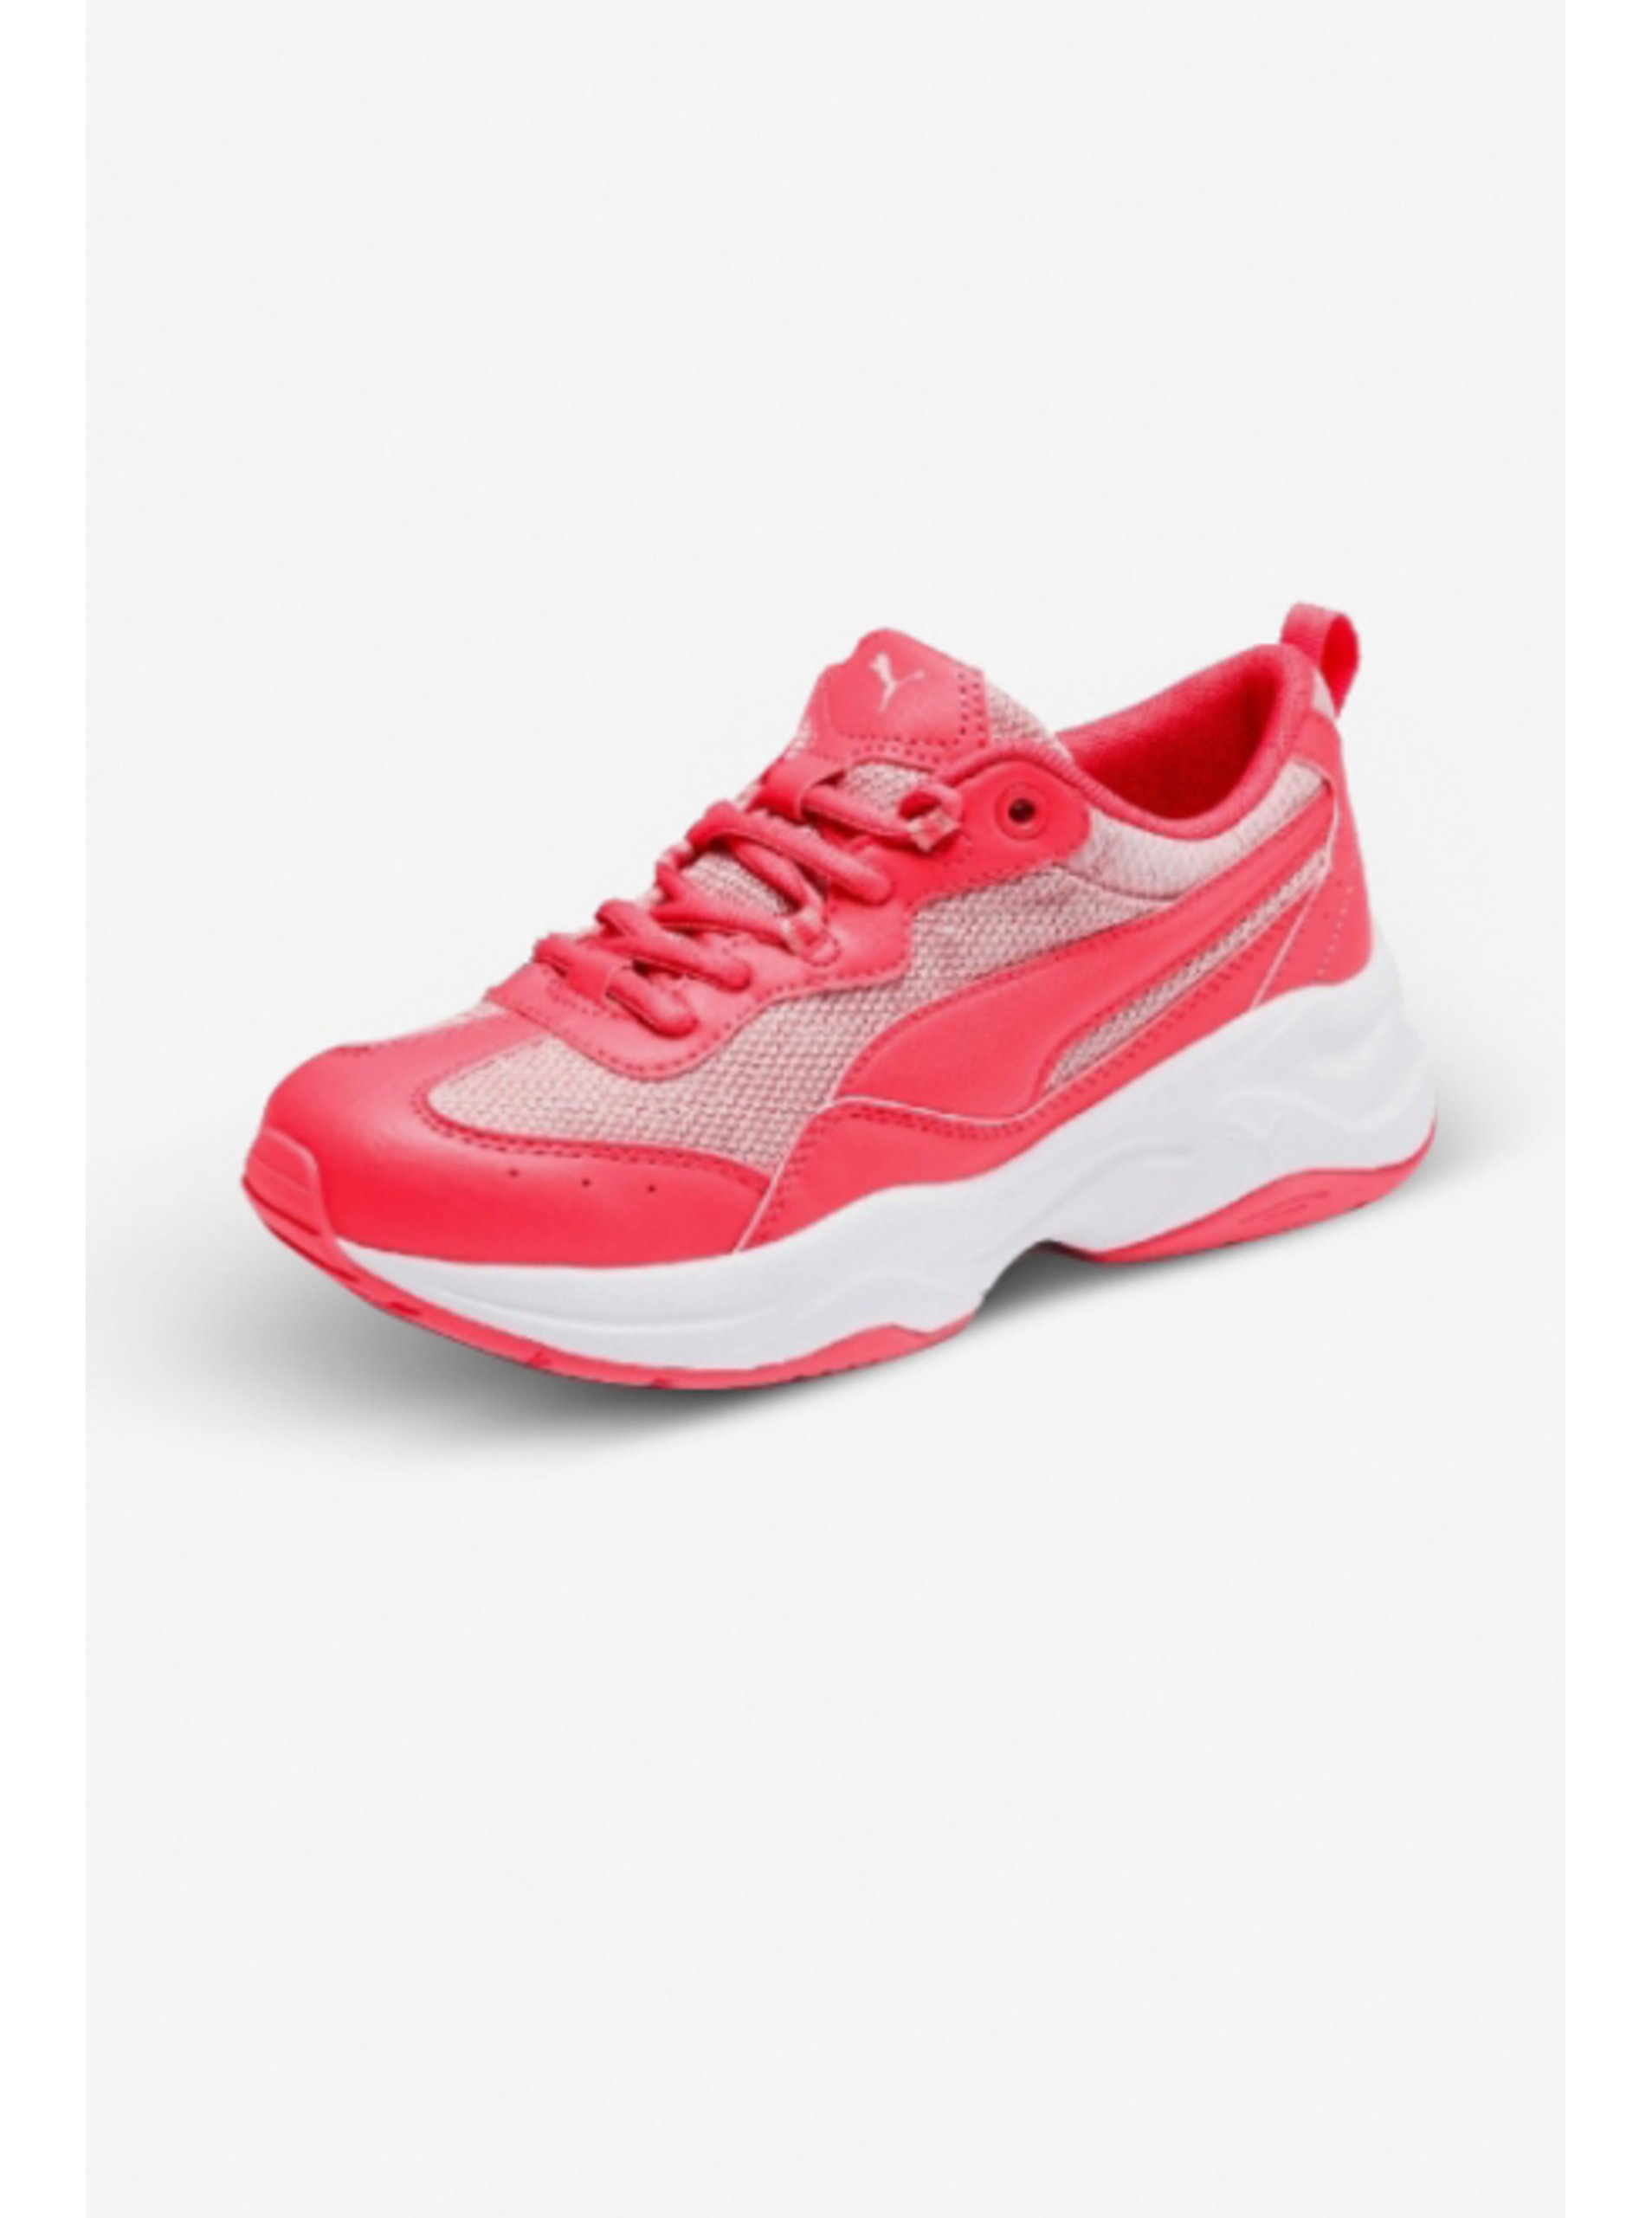 E-shop Tmavě růžové holčičí tenisky Puma Cilia Jr